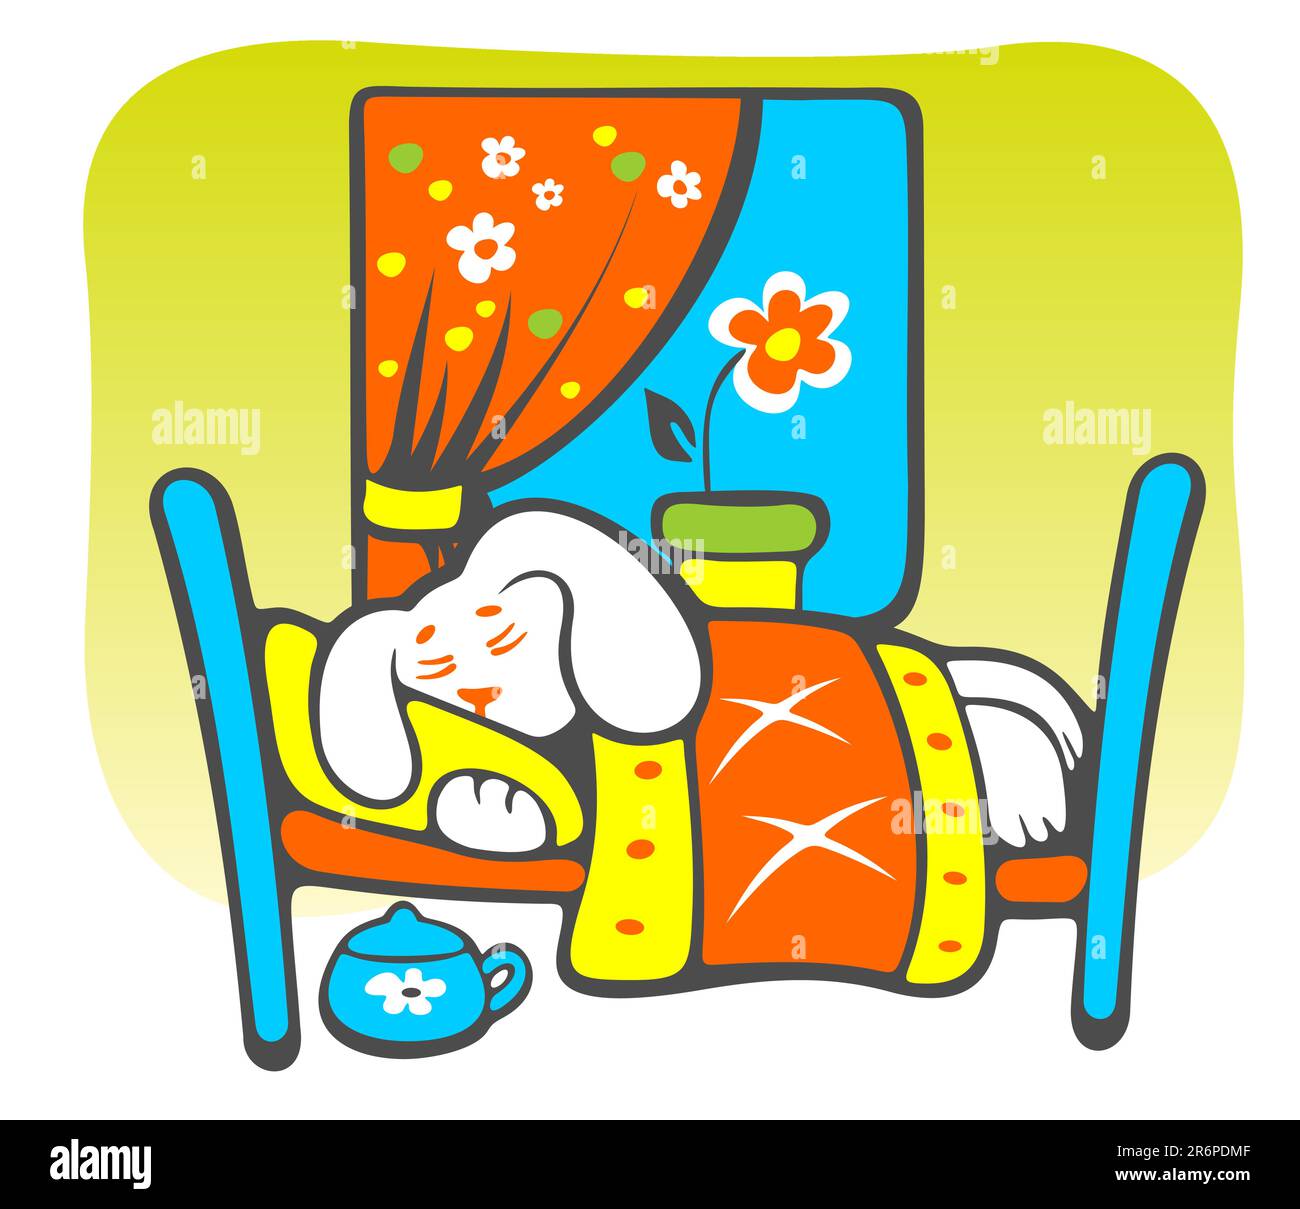 Cheerful sleeping cartoon puppy  on a green background. Stock Vector